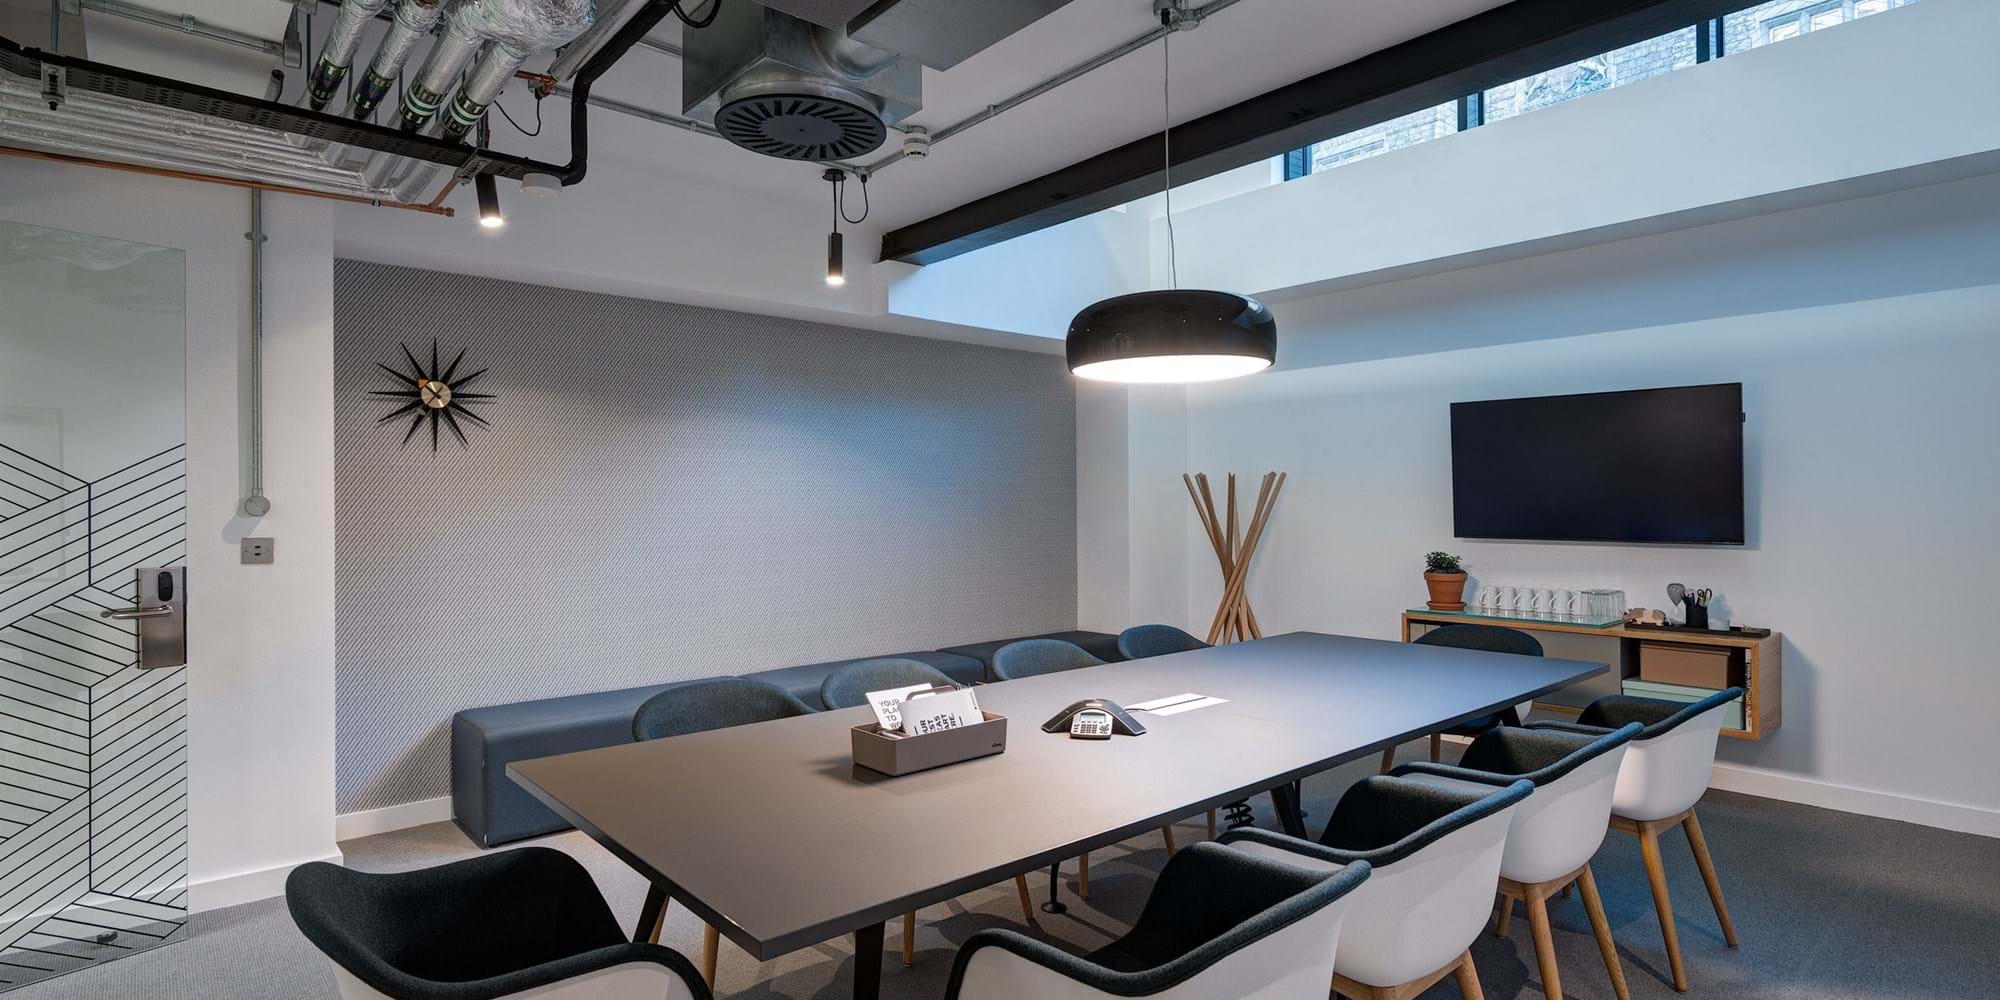 Modus Workspace office design, fit out and refurbishment - Regus spaces Epworth - Spaces Epworth 23 highres sRGB.jpg